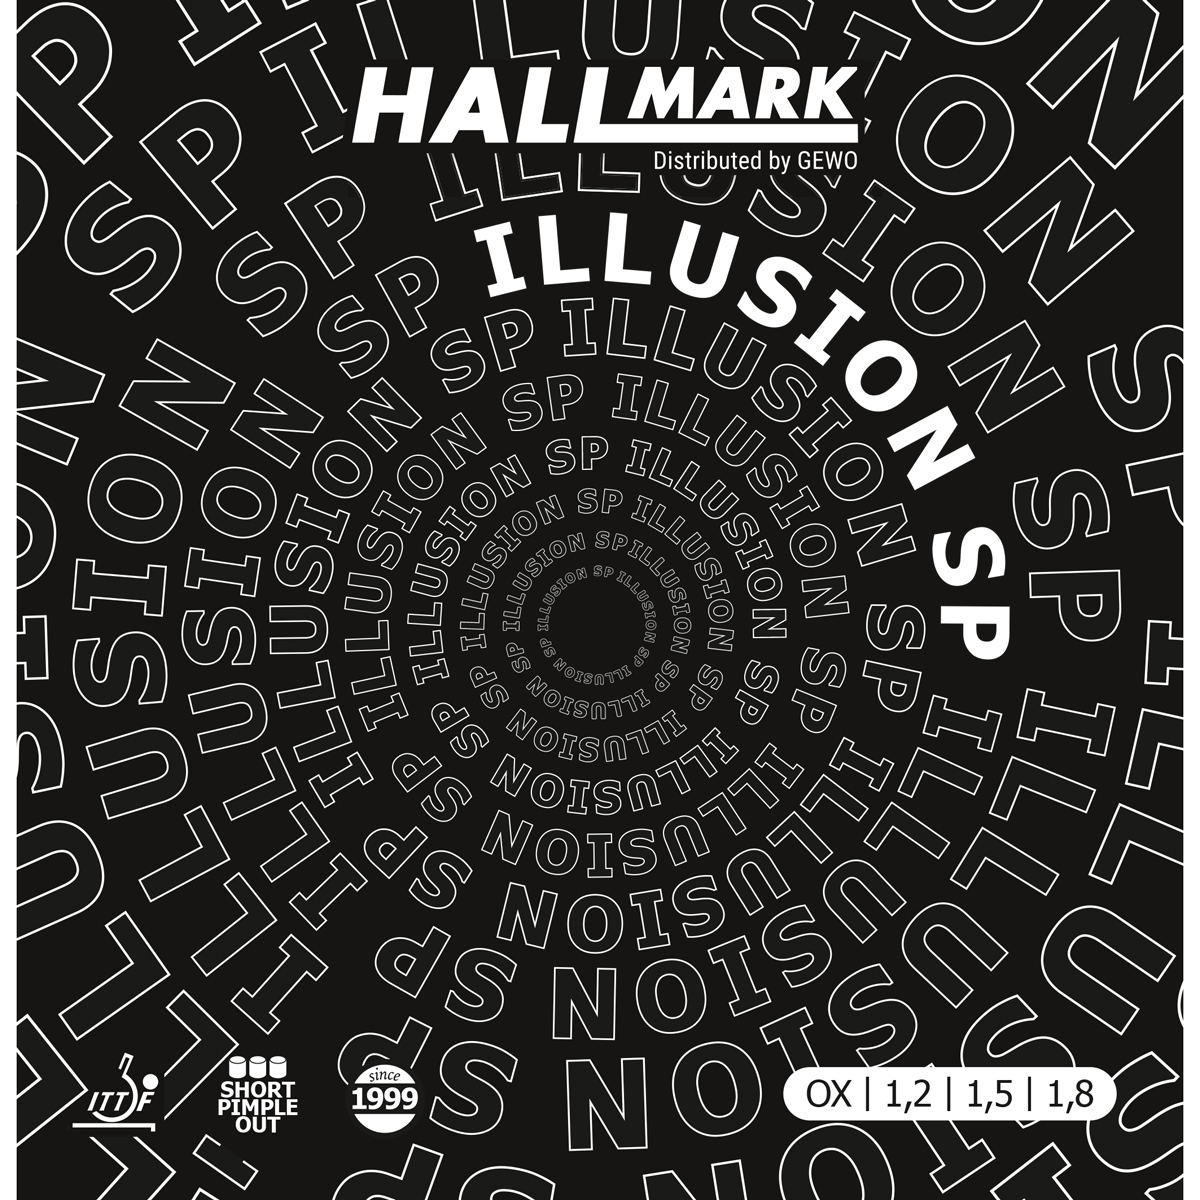 HALLMARK Belag Illusion-SP